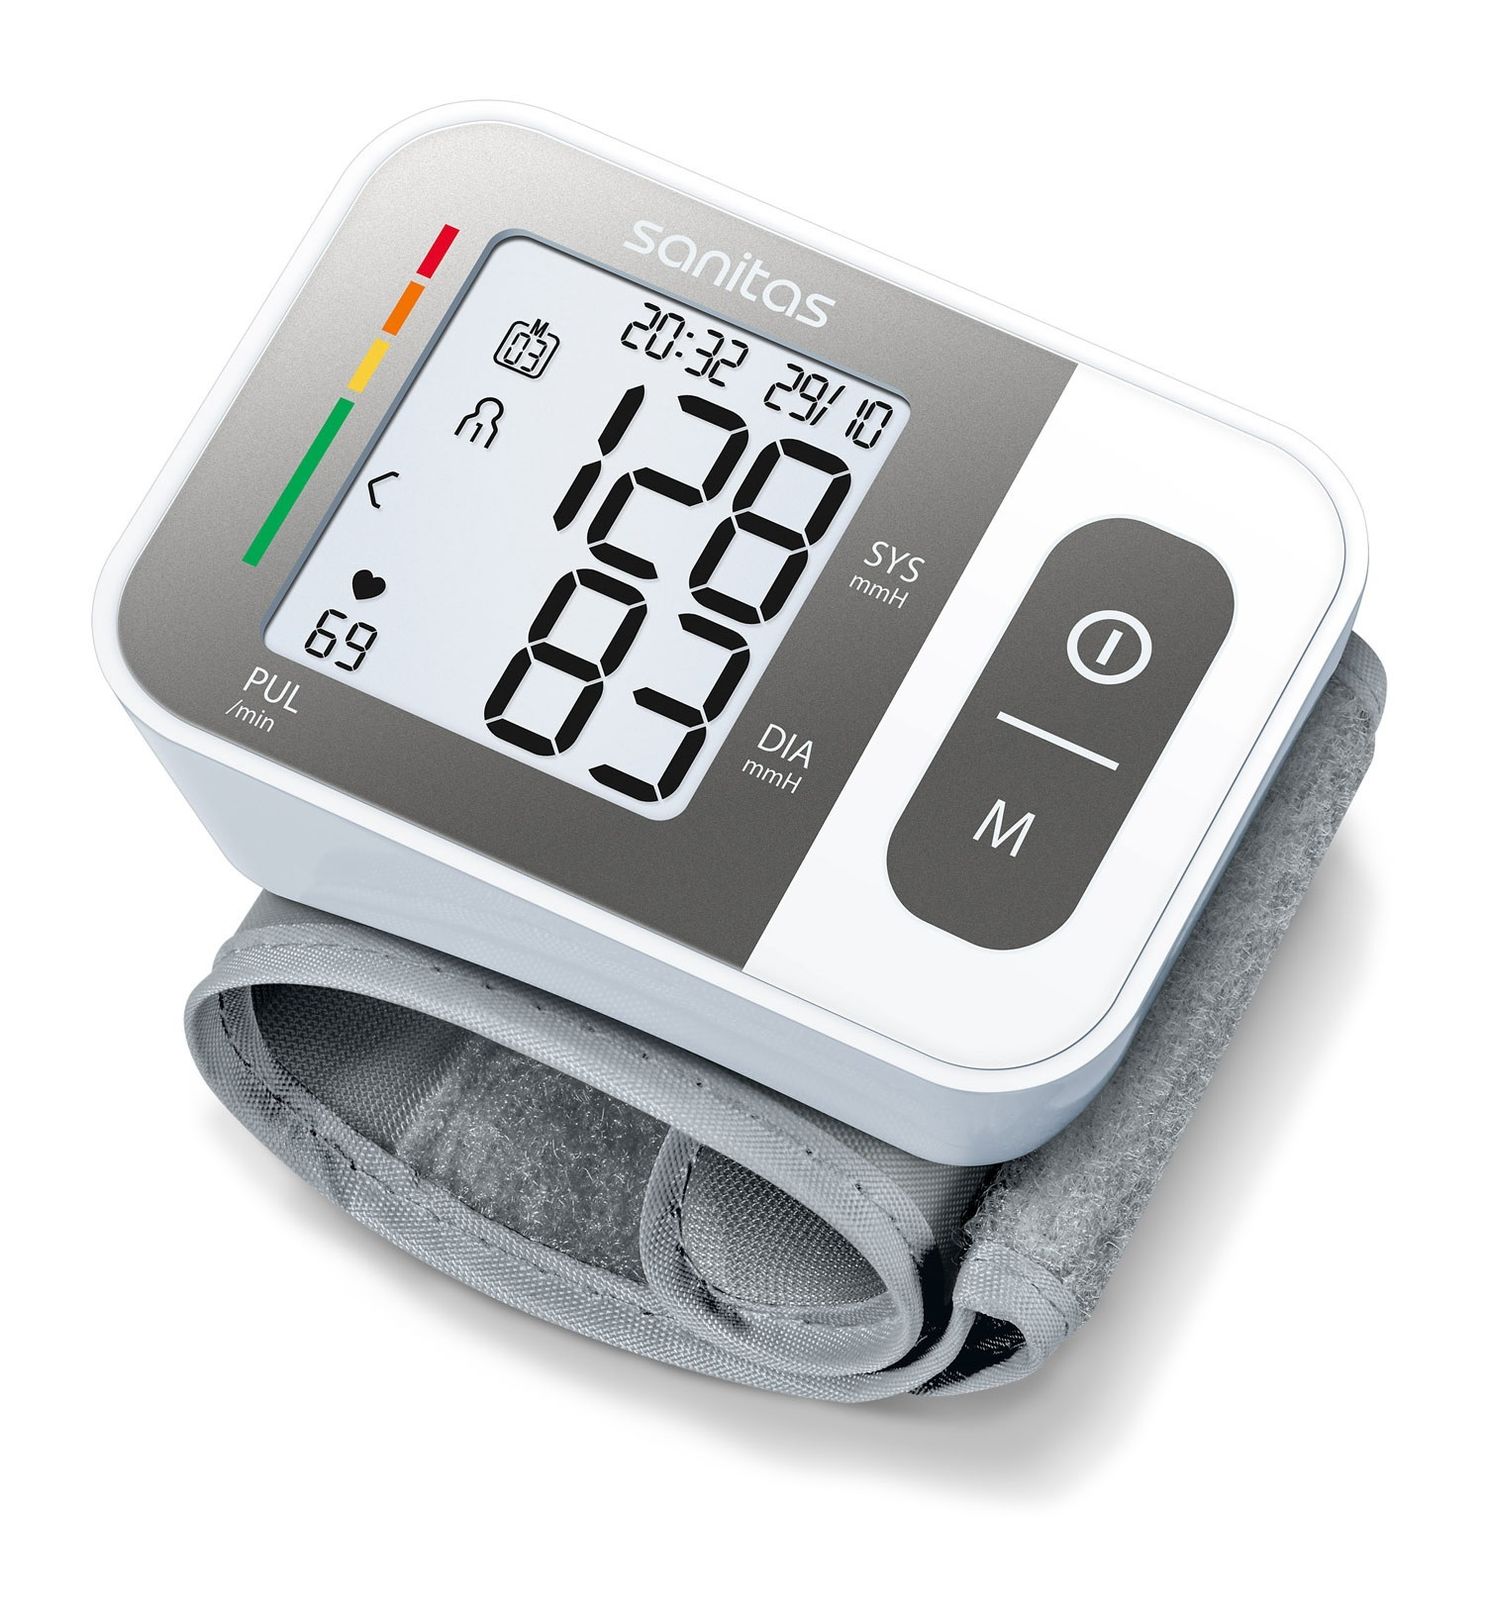 Sanitas SBC 15 Handgelenk-Blutdruckmessgerät | Weltbild.at